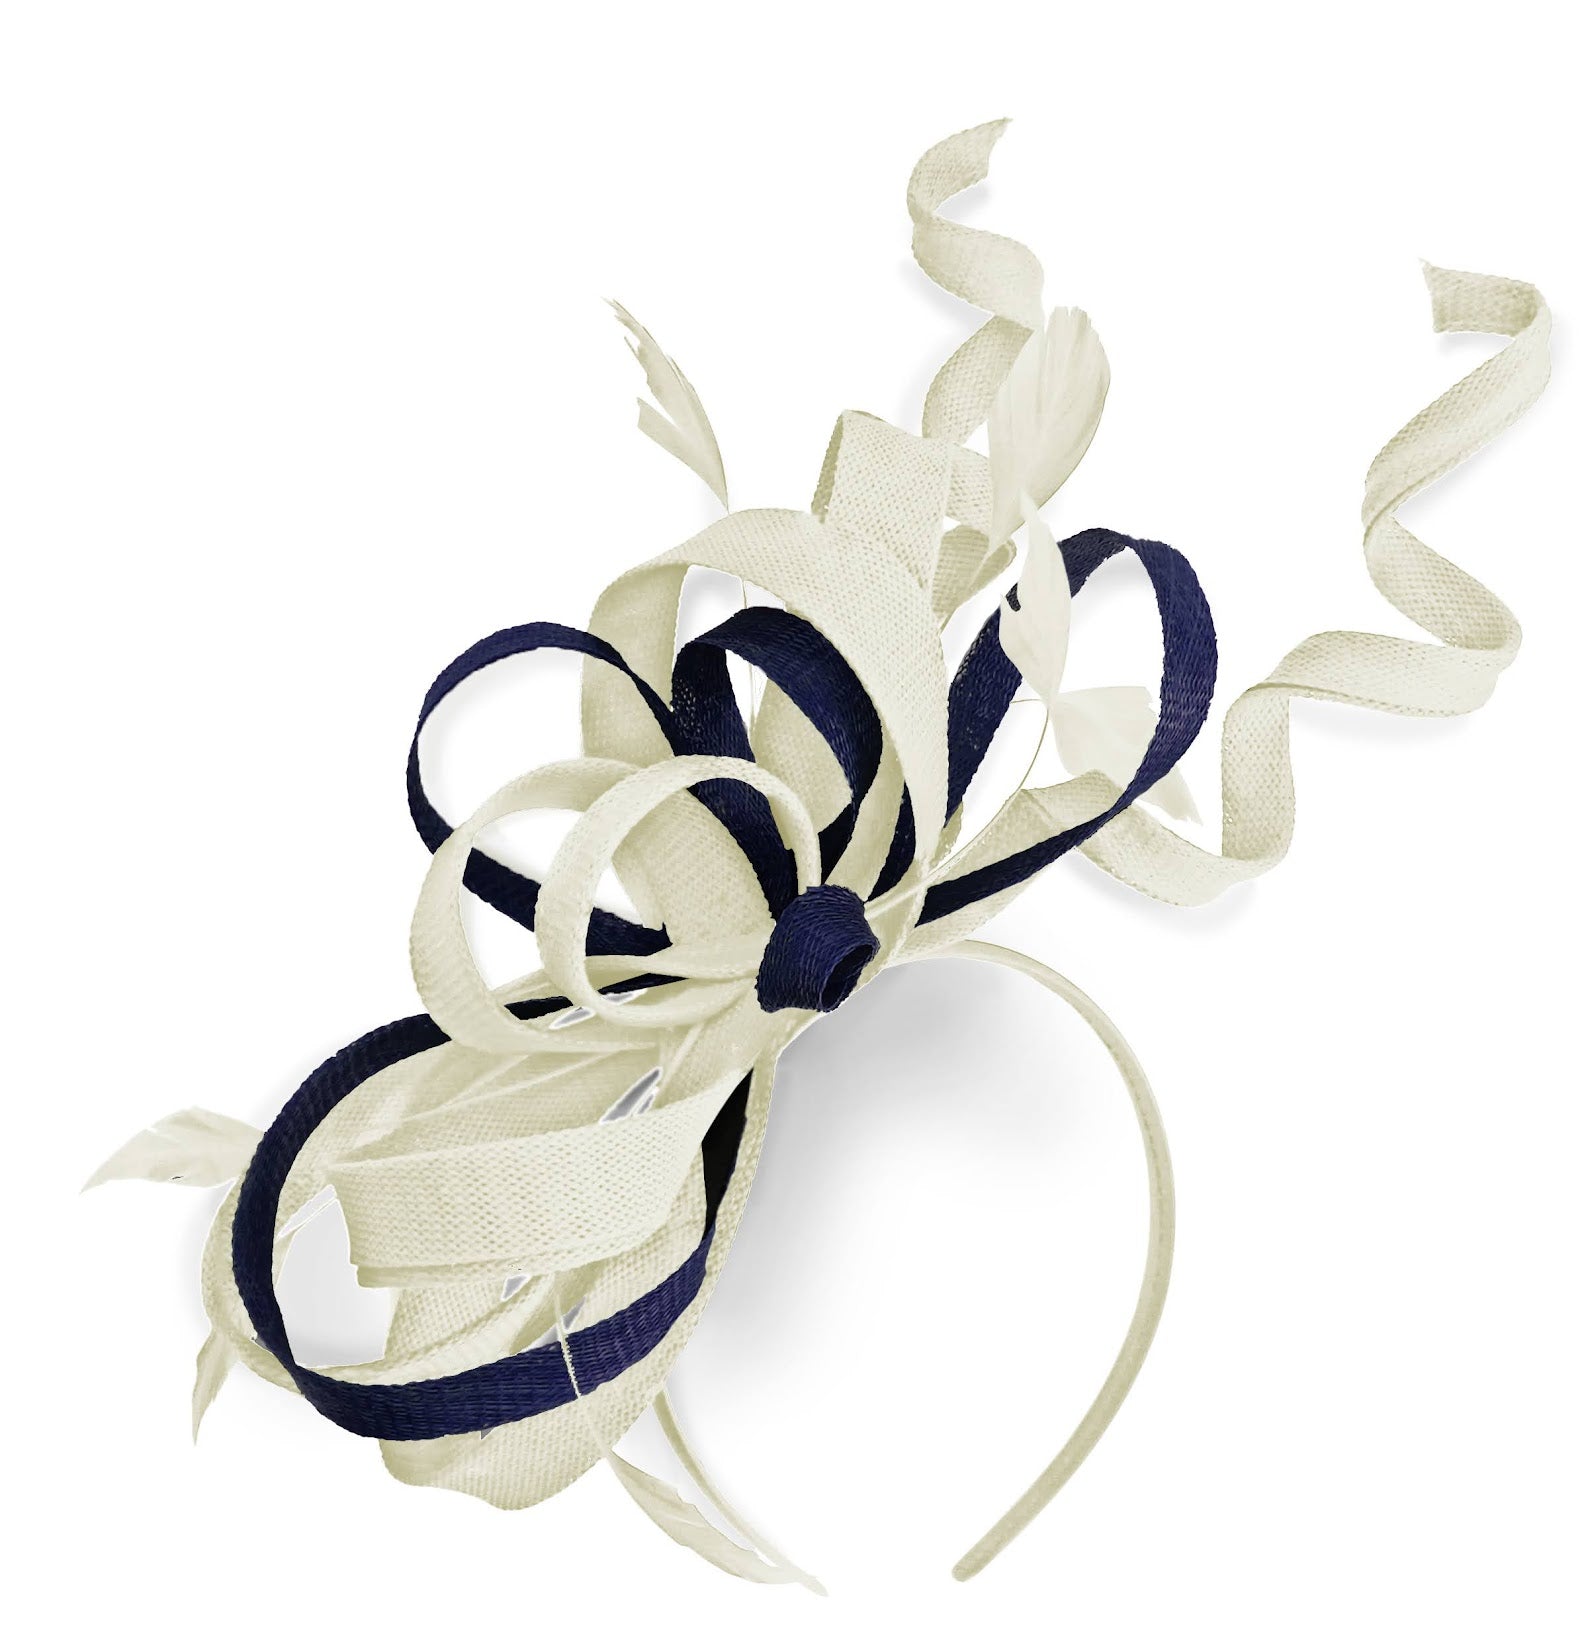 Caprilite Cream Ivory and Navy Wedding Swirl Fascinator Headband Alice Band Ascot Races Loop Net